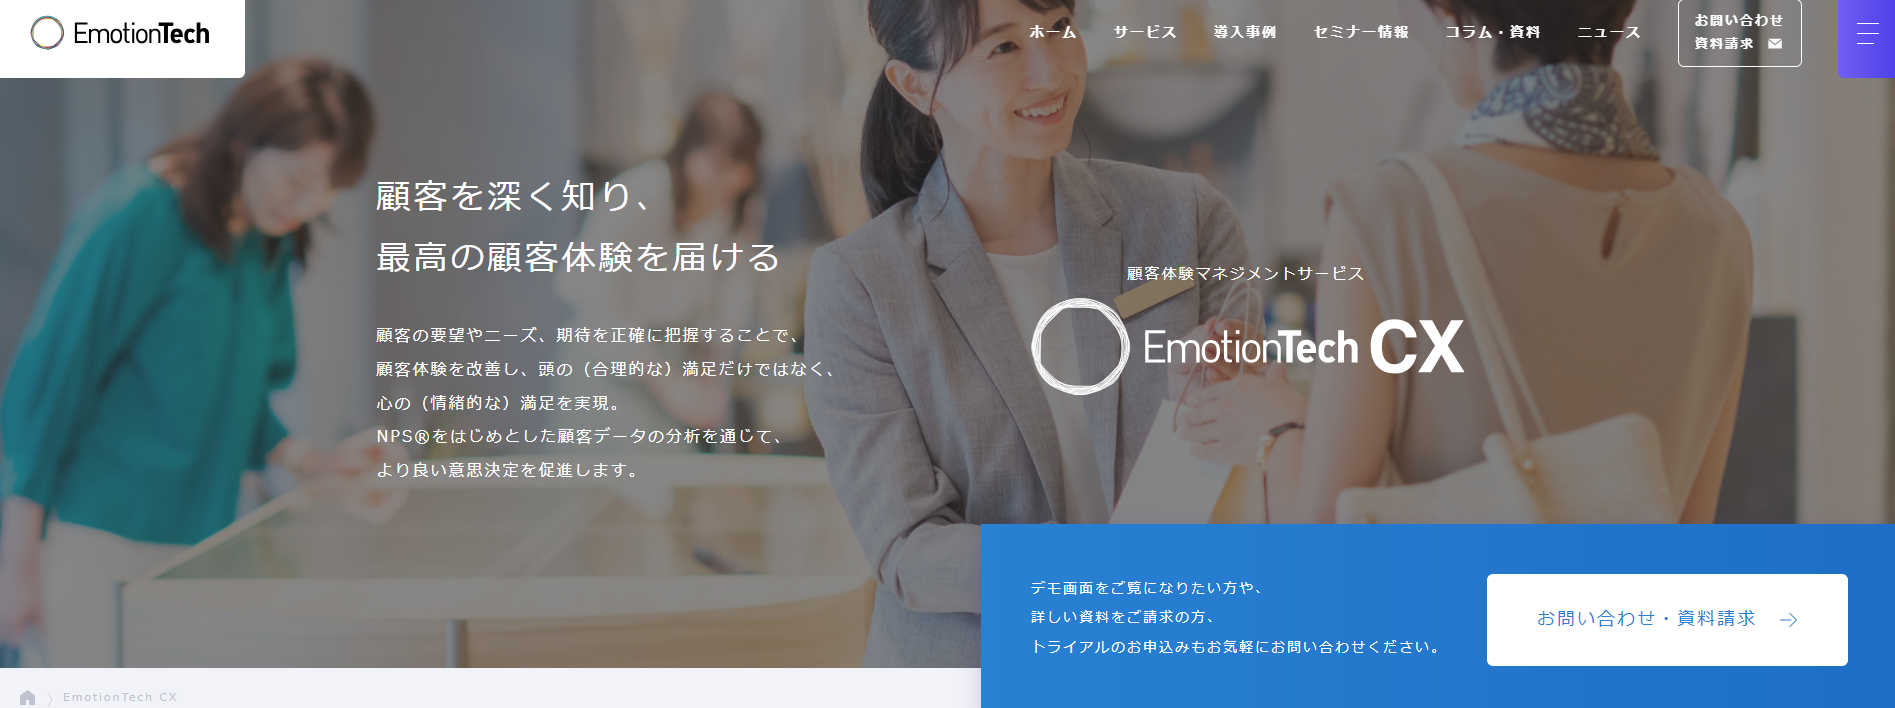 Emotion Tech CX.png